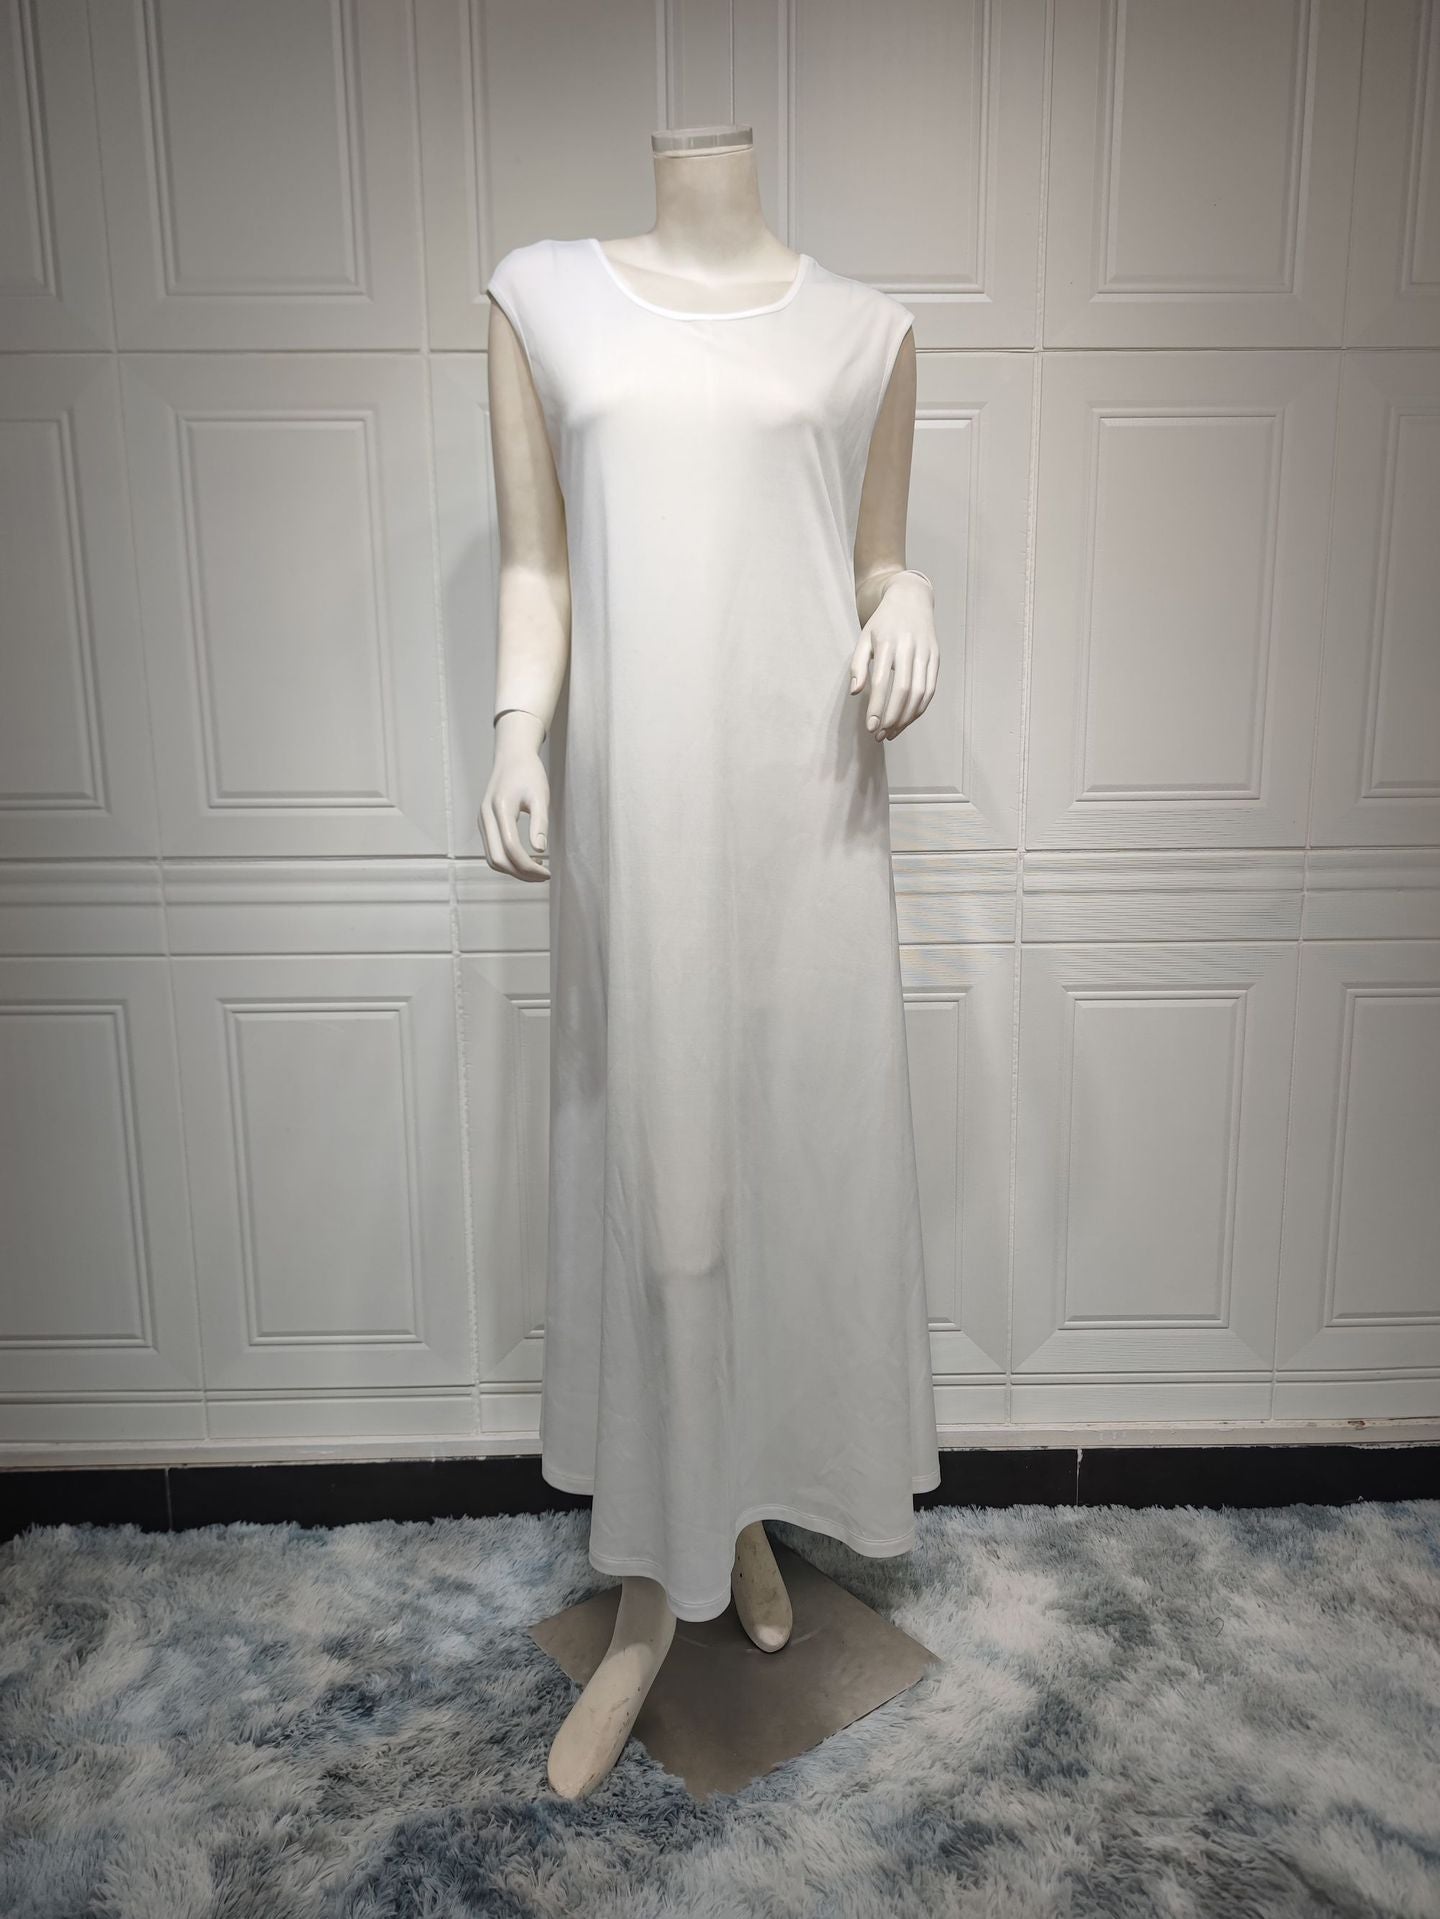 MQ063 Middle East Muslim Dubai robe 2023 foreign trade women's white splicing large size women's abaya robe